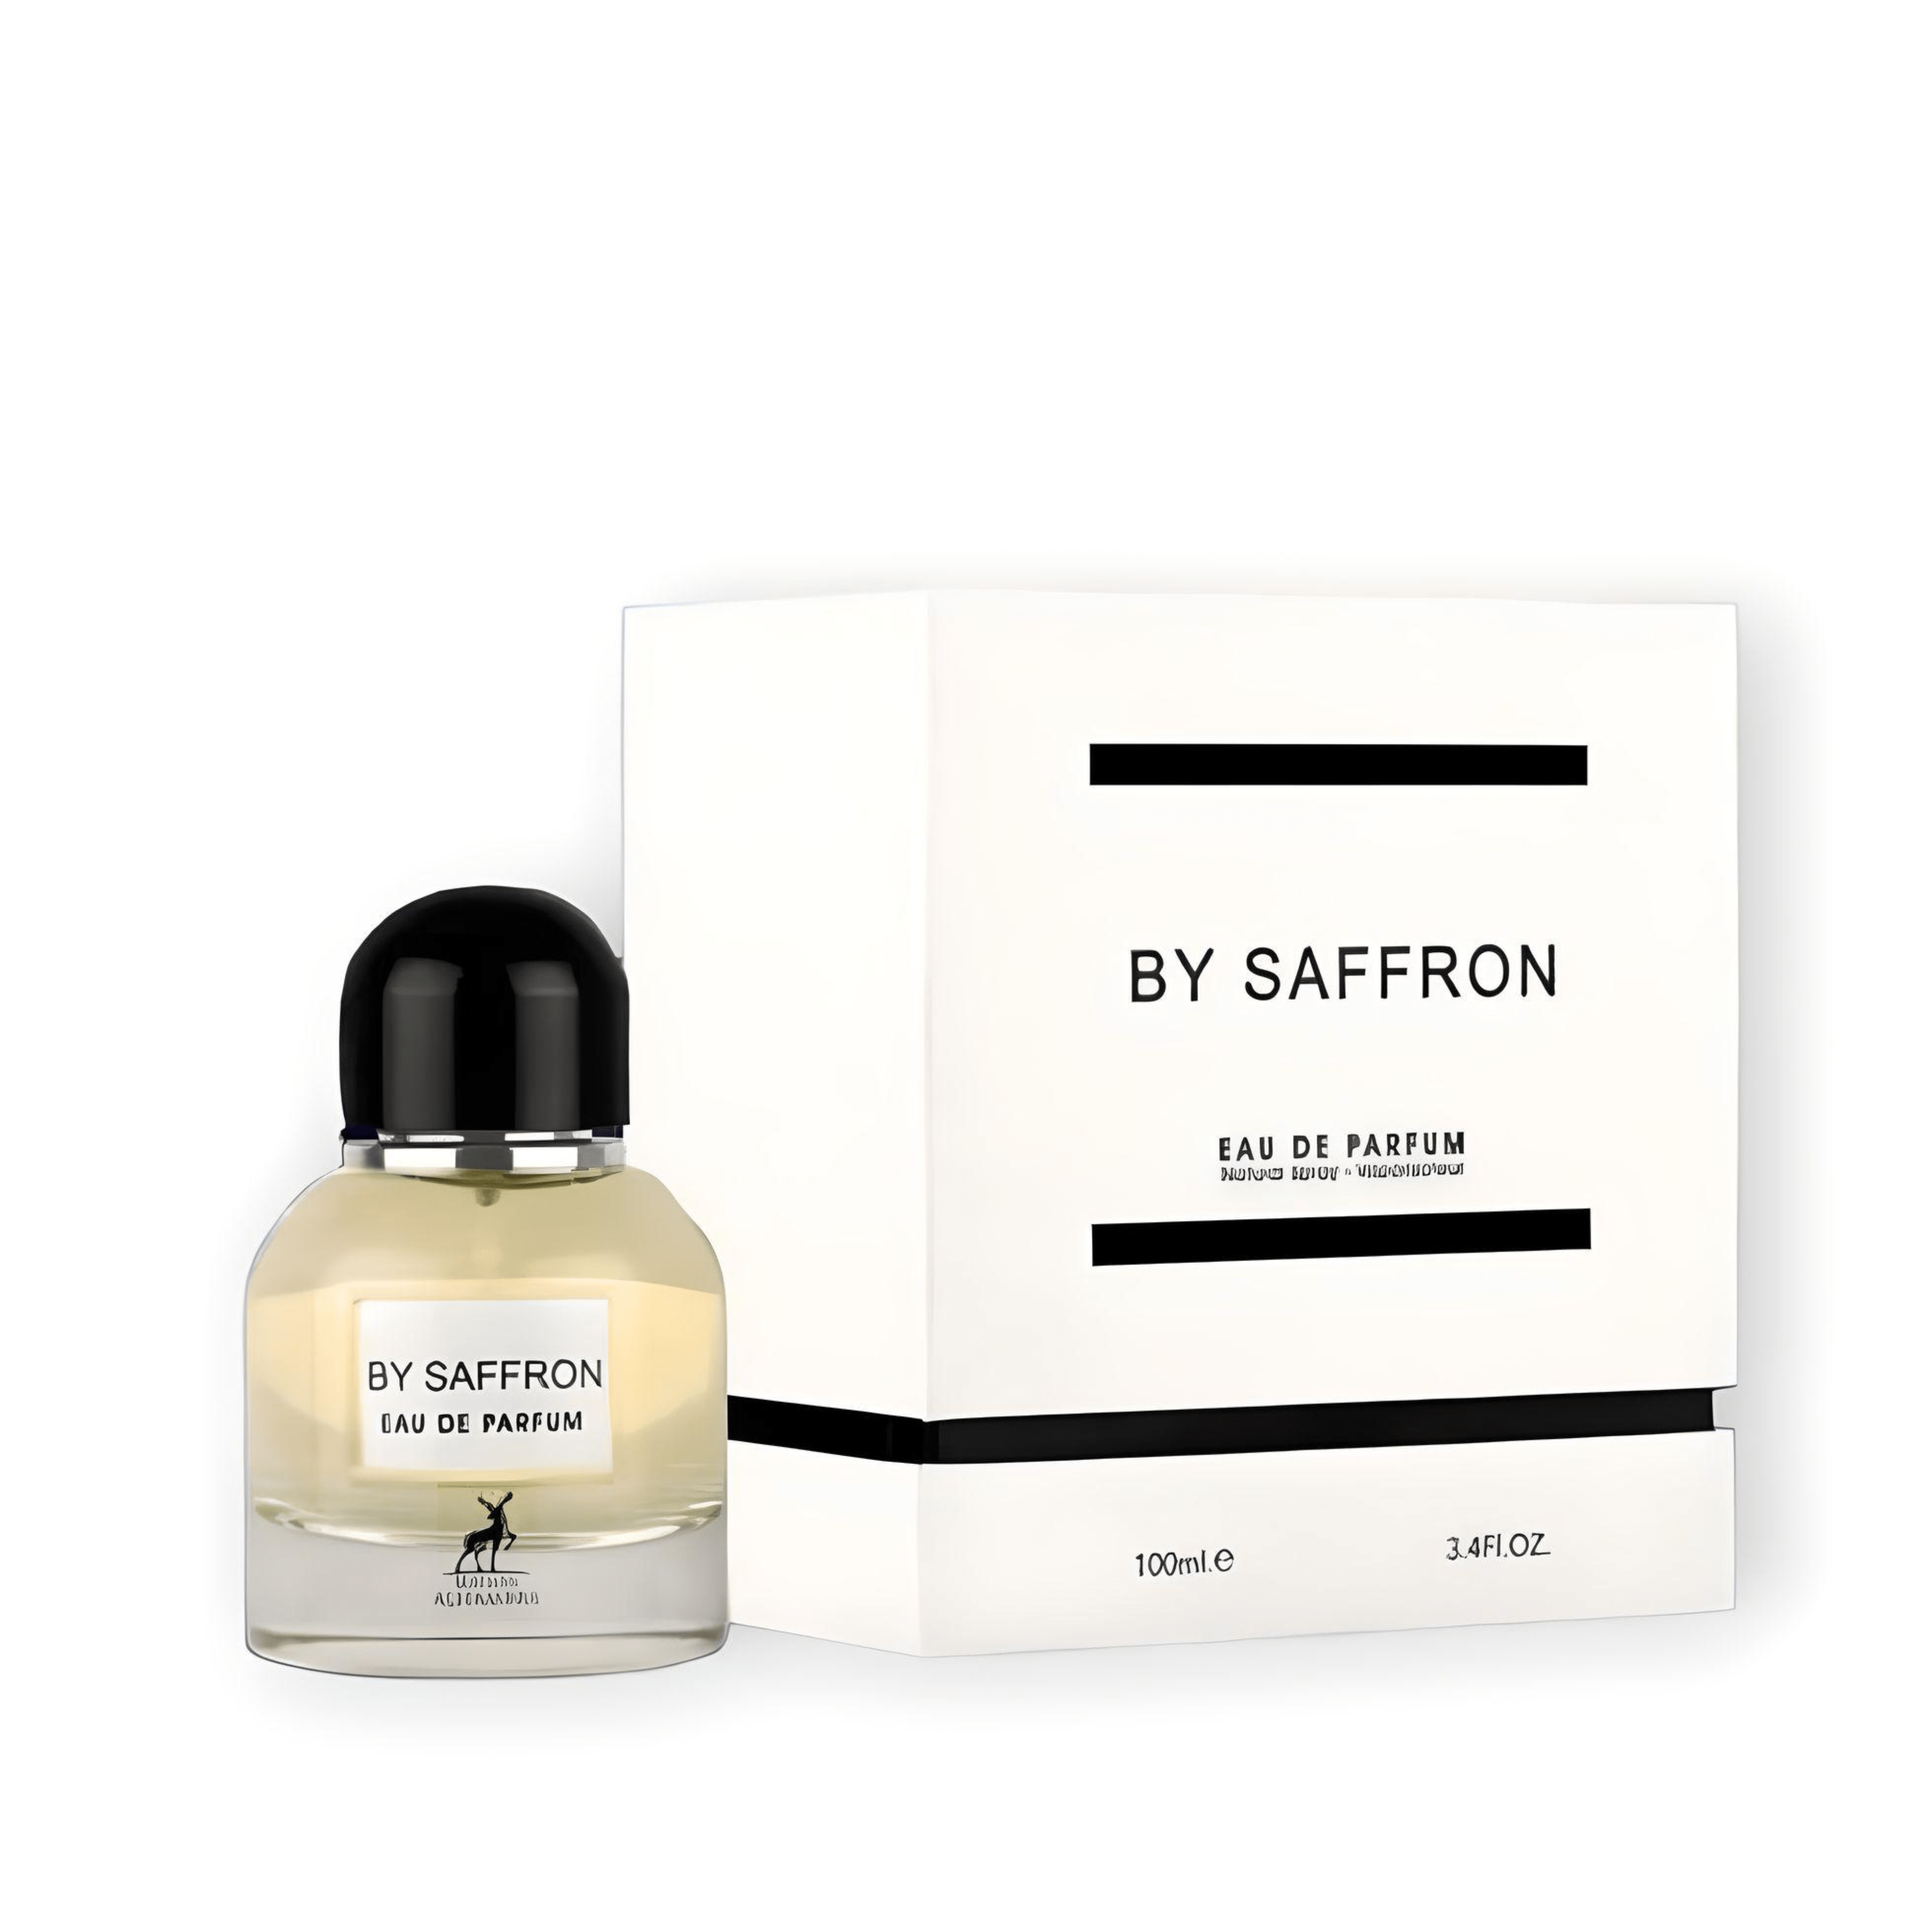 By Saffron Perfume Eau De Parfum By Maison Alhambra Lattafa Inspired By Byredo Black Saffron